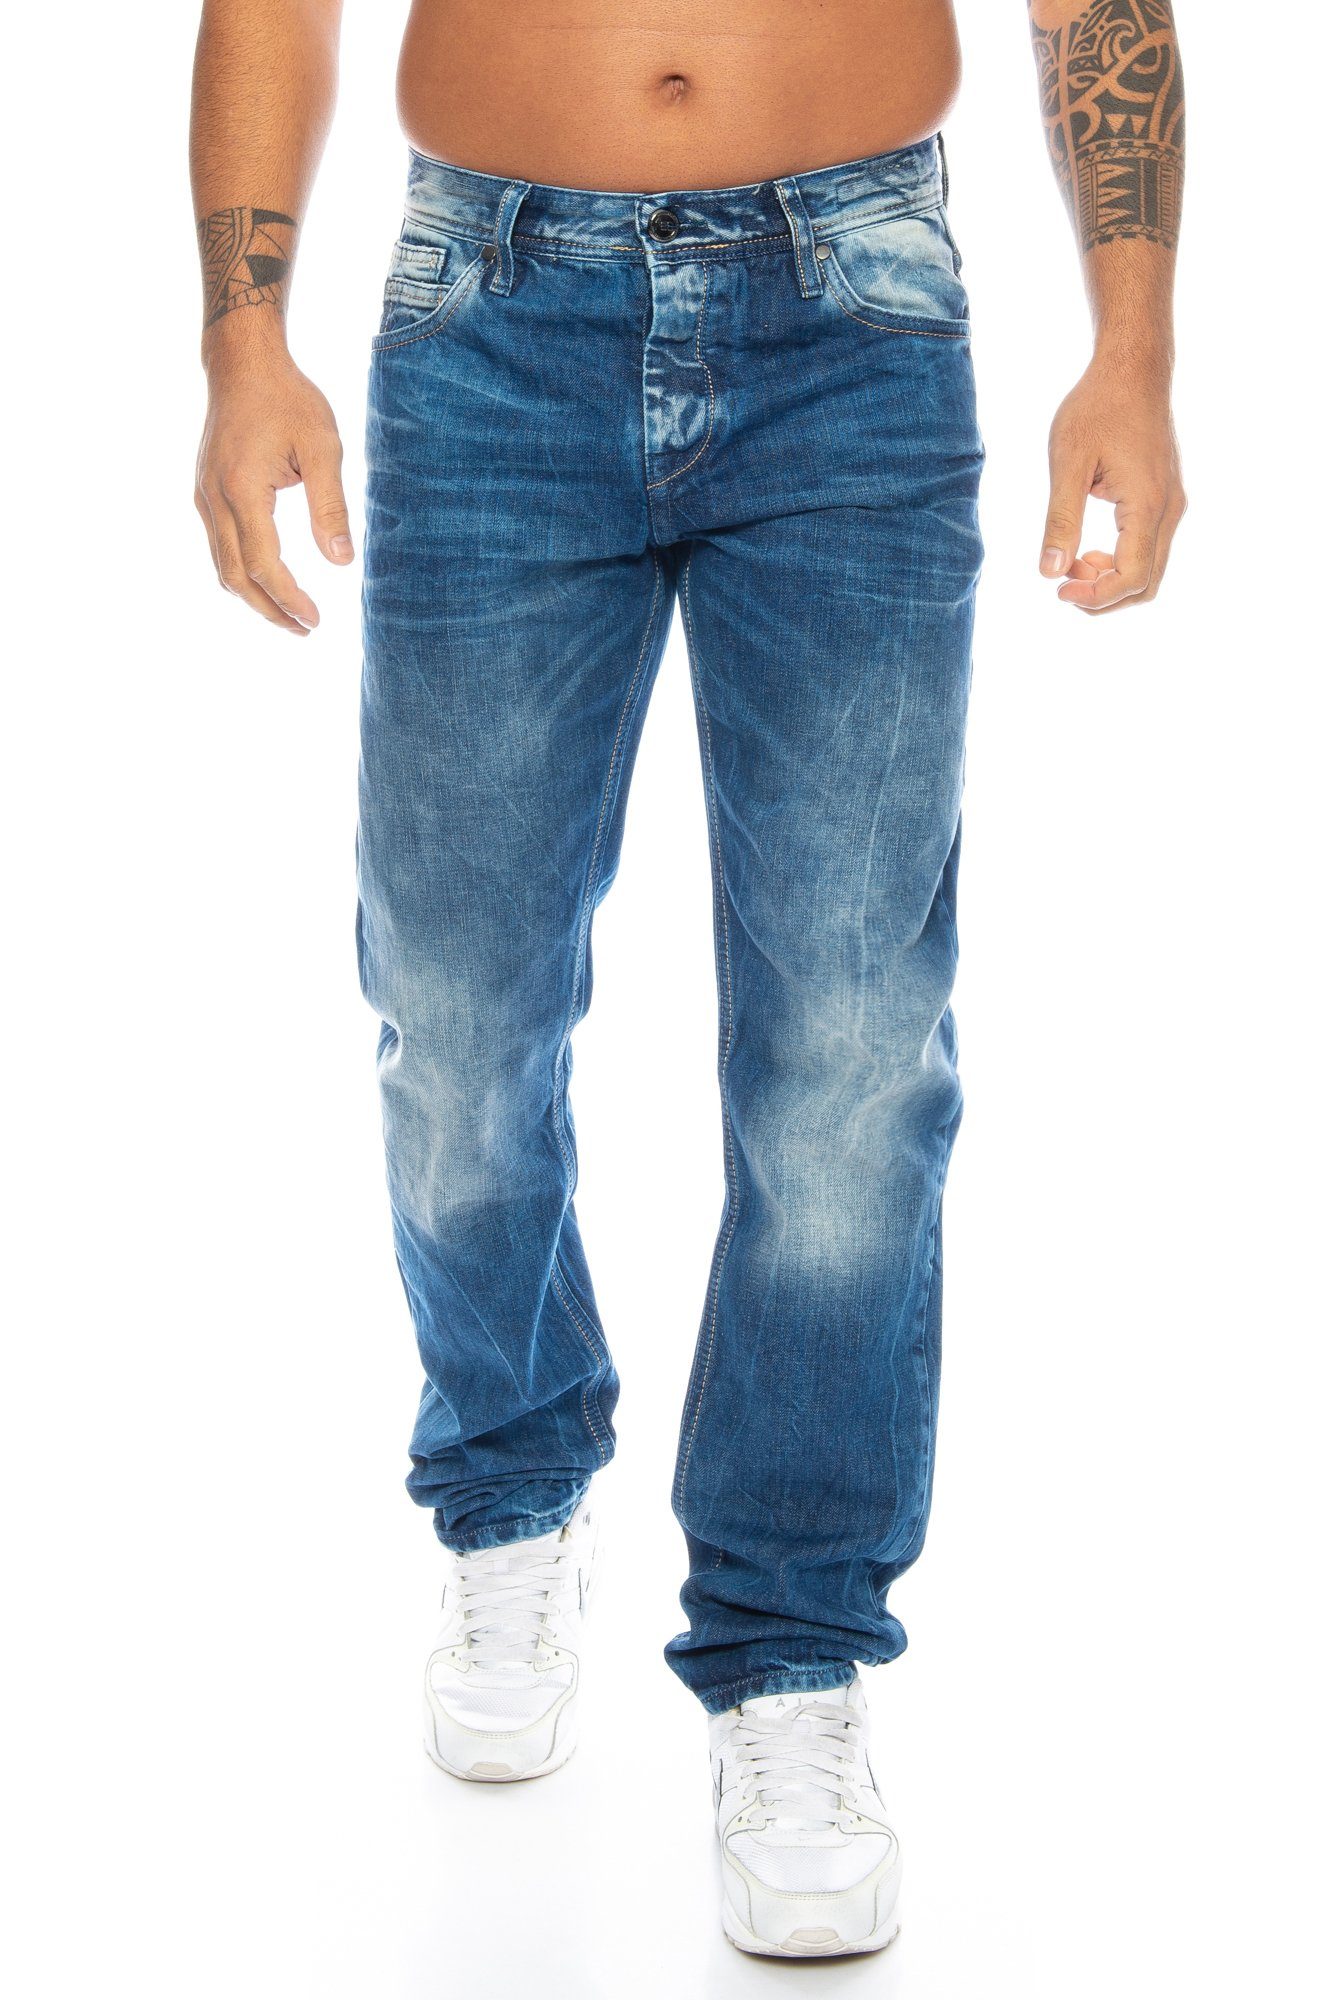 Cipo & Baxx Slim-fit-Jeans Herren Jeans Hose im stylischen casual Look mit dezenten dicken Nähten Aufwendige Verziering mit dicken Nähten